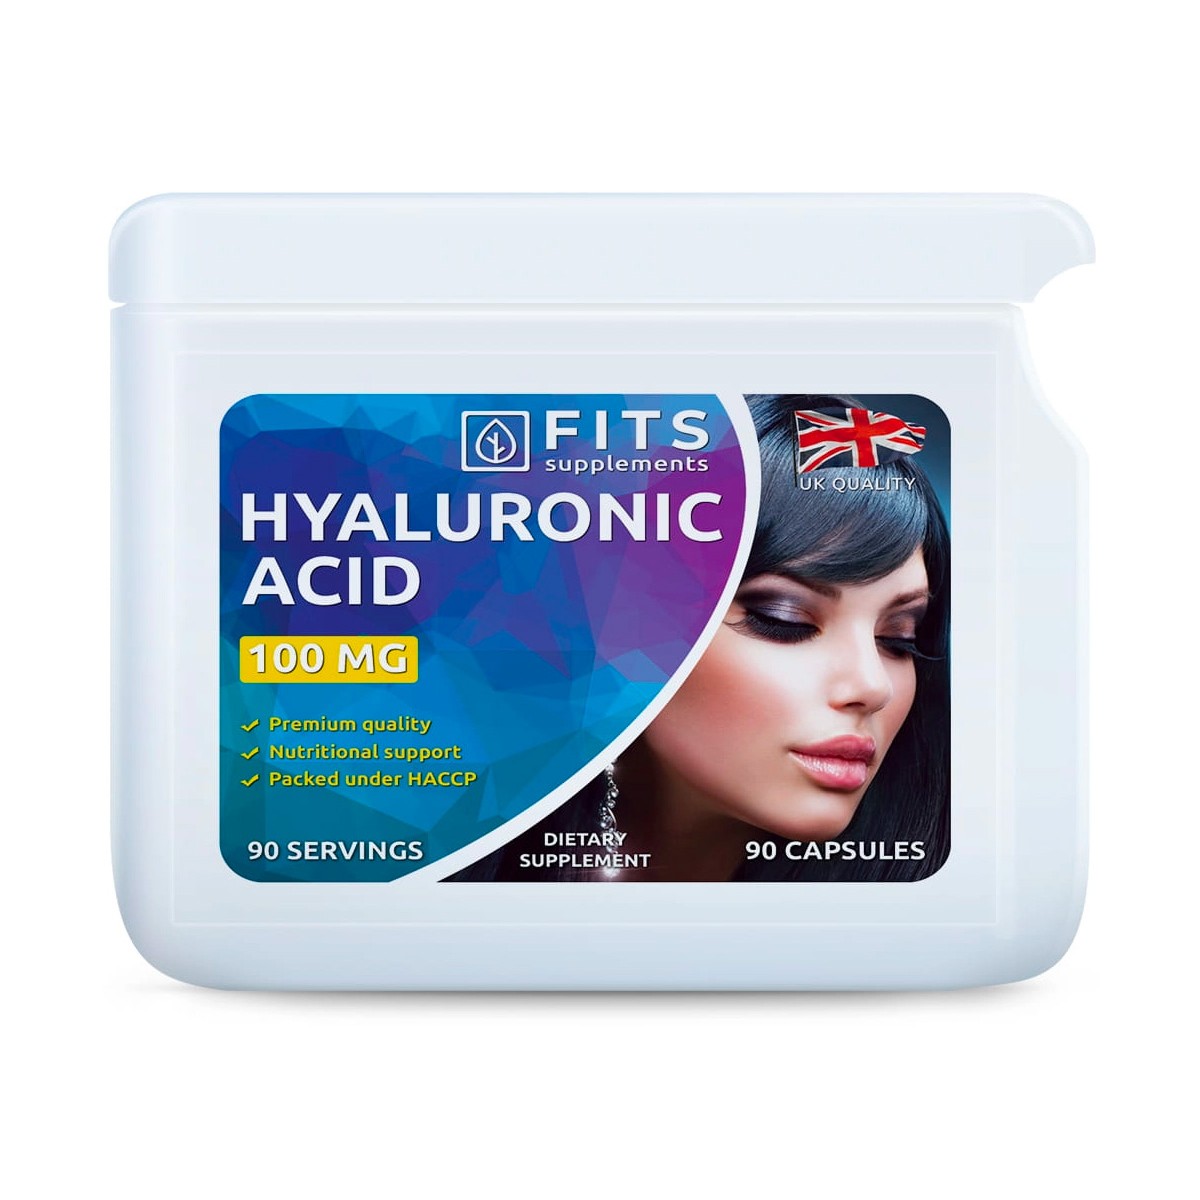 Nutricosmética - Suplementos al mejor precio: Fits Suplements Hyaluronic Acid 100 MG (90 capsulas - 45 dias) de FITS Supplements en Skin Thinks - Piel Seca